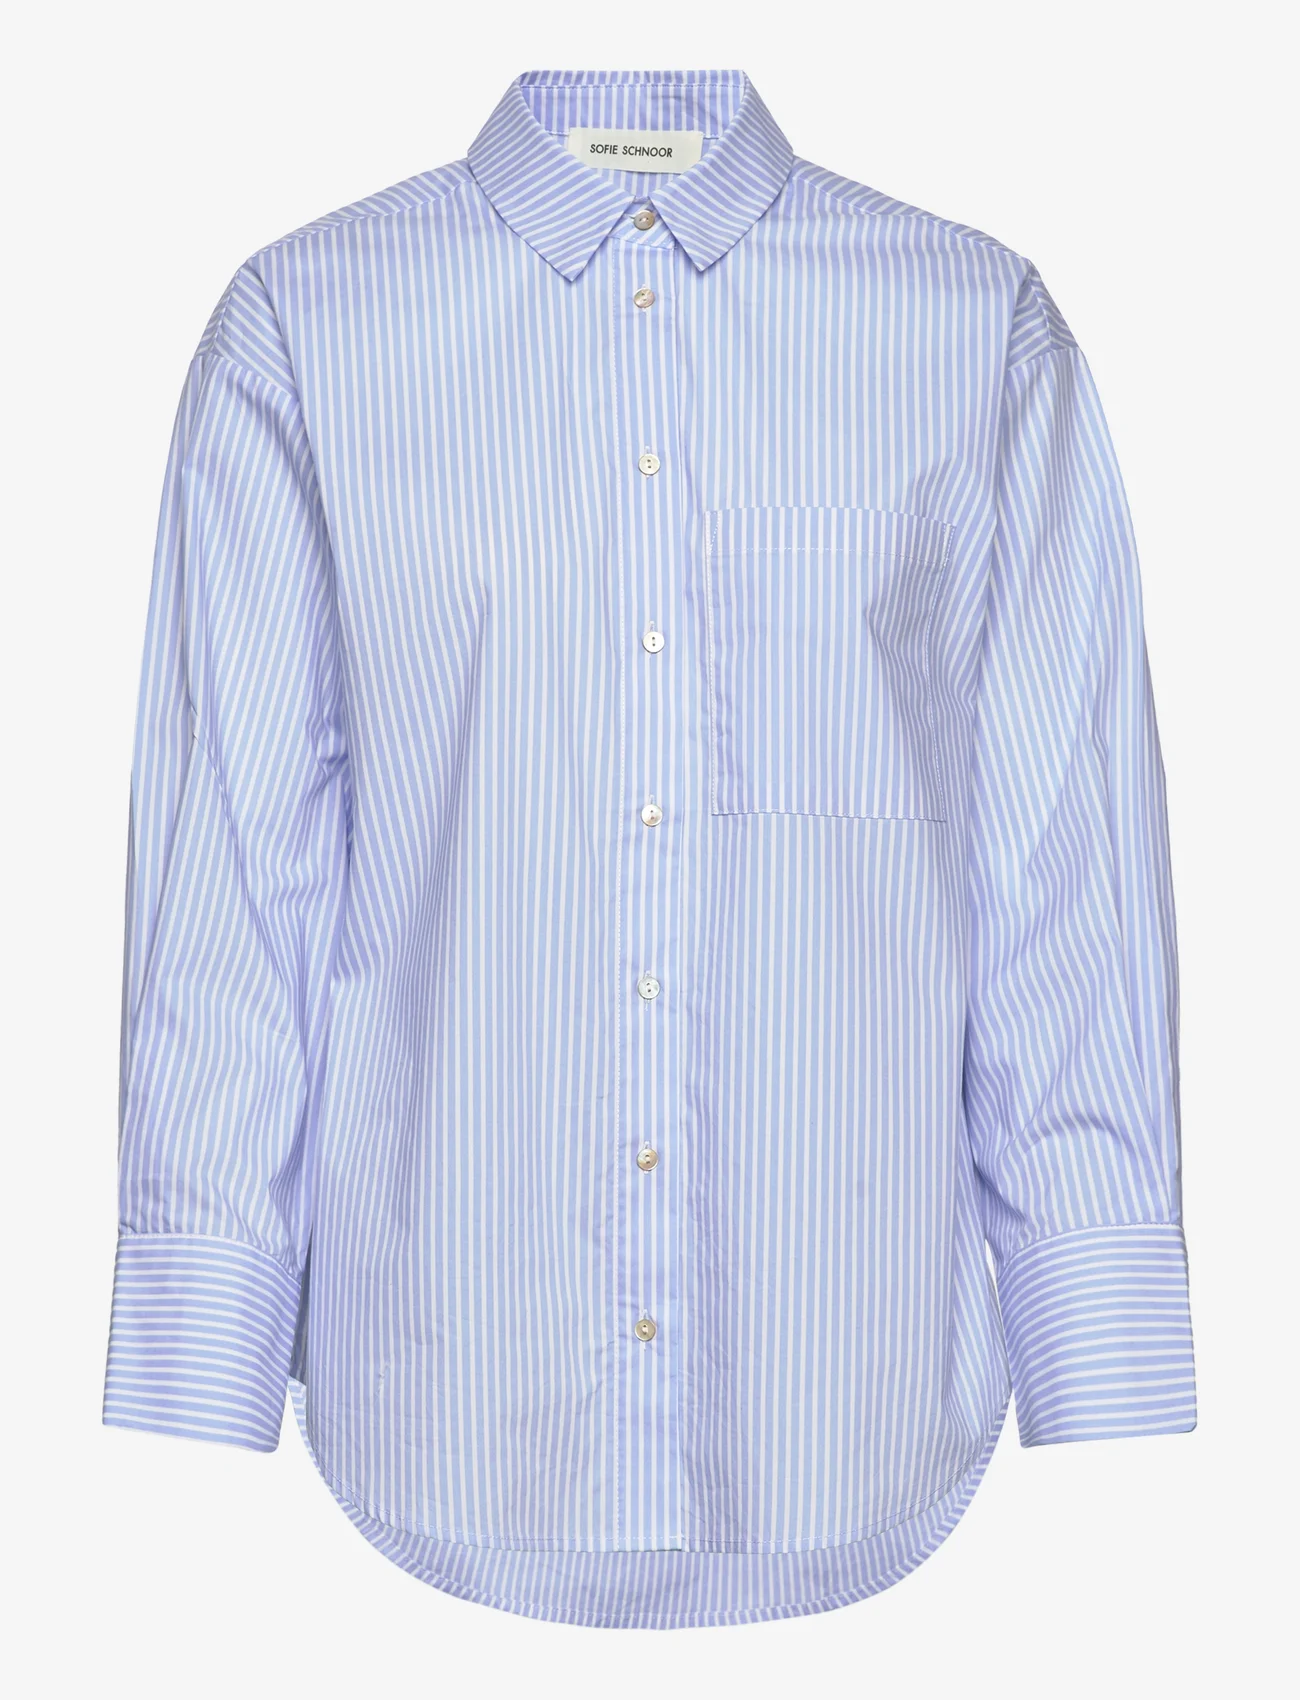 Sofie Schnoor - Shirt - langärmlige hemden - light blue striped - 0